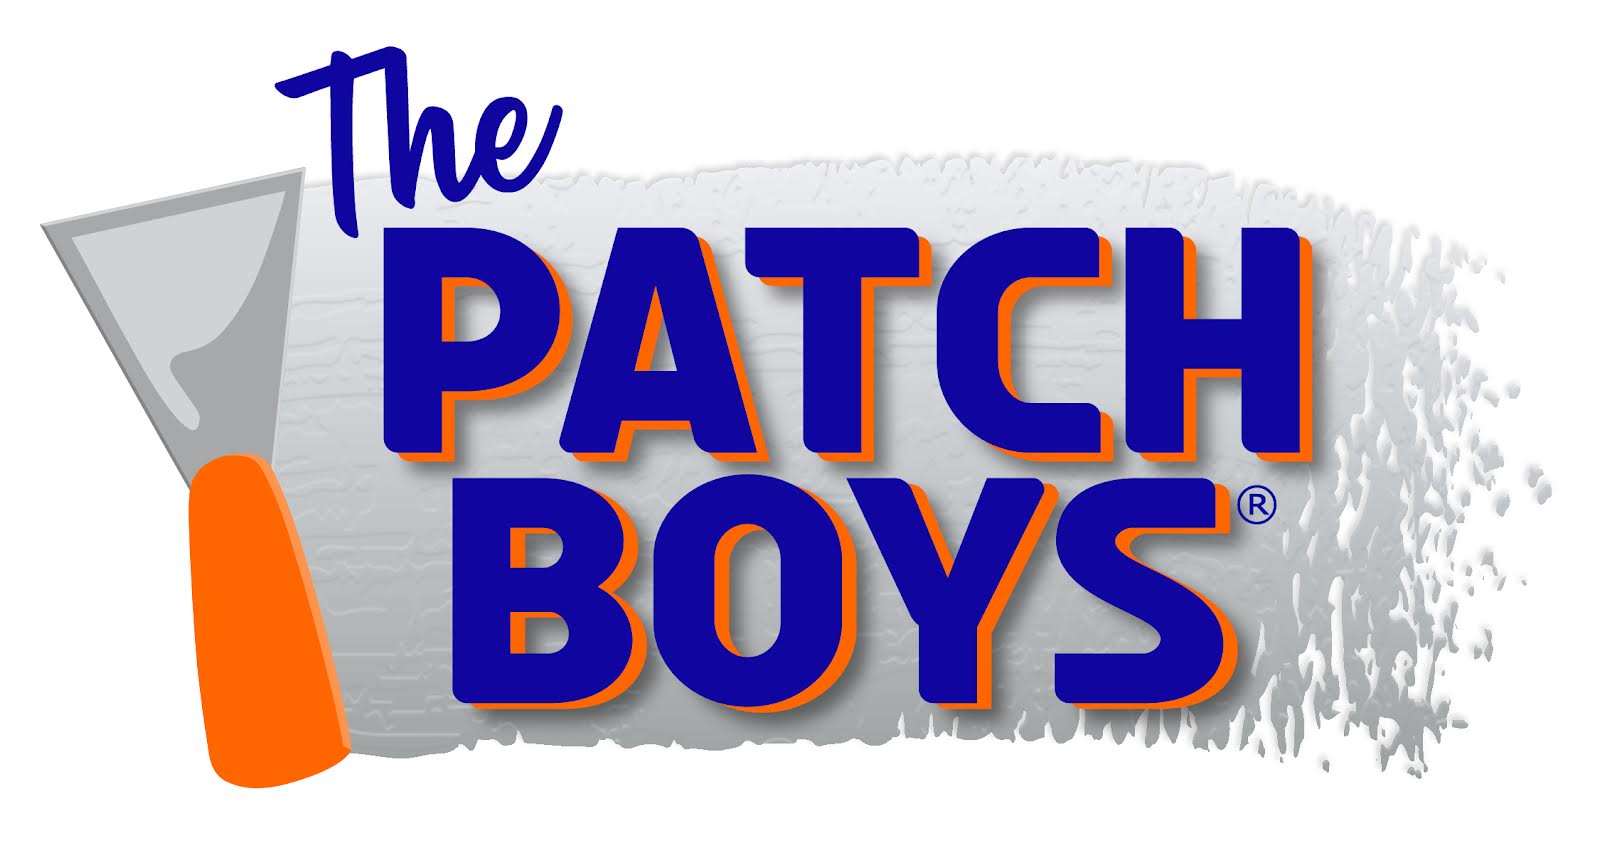 The Patch Boys of Greater Spokane Logo